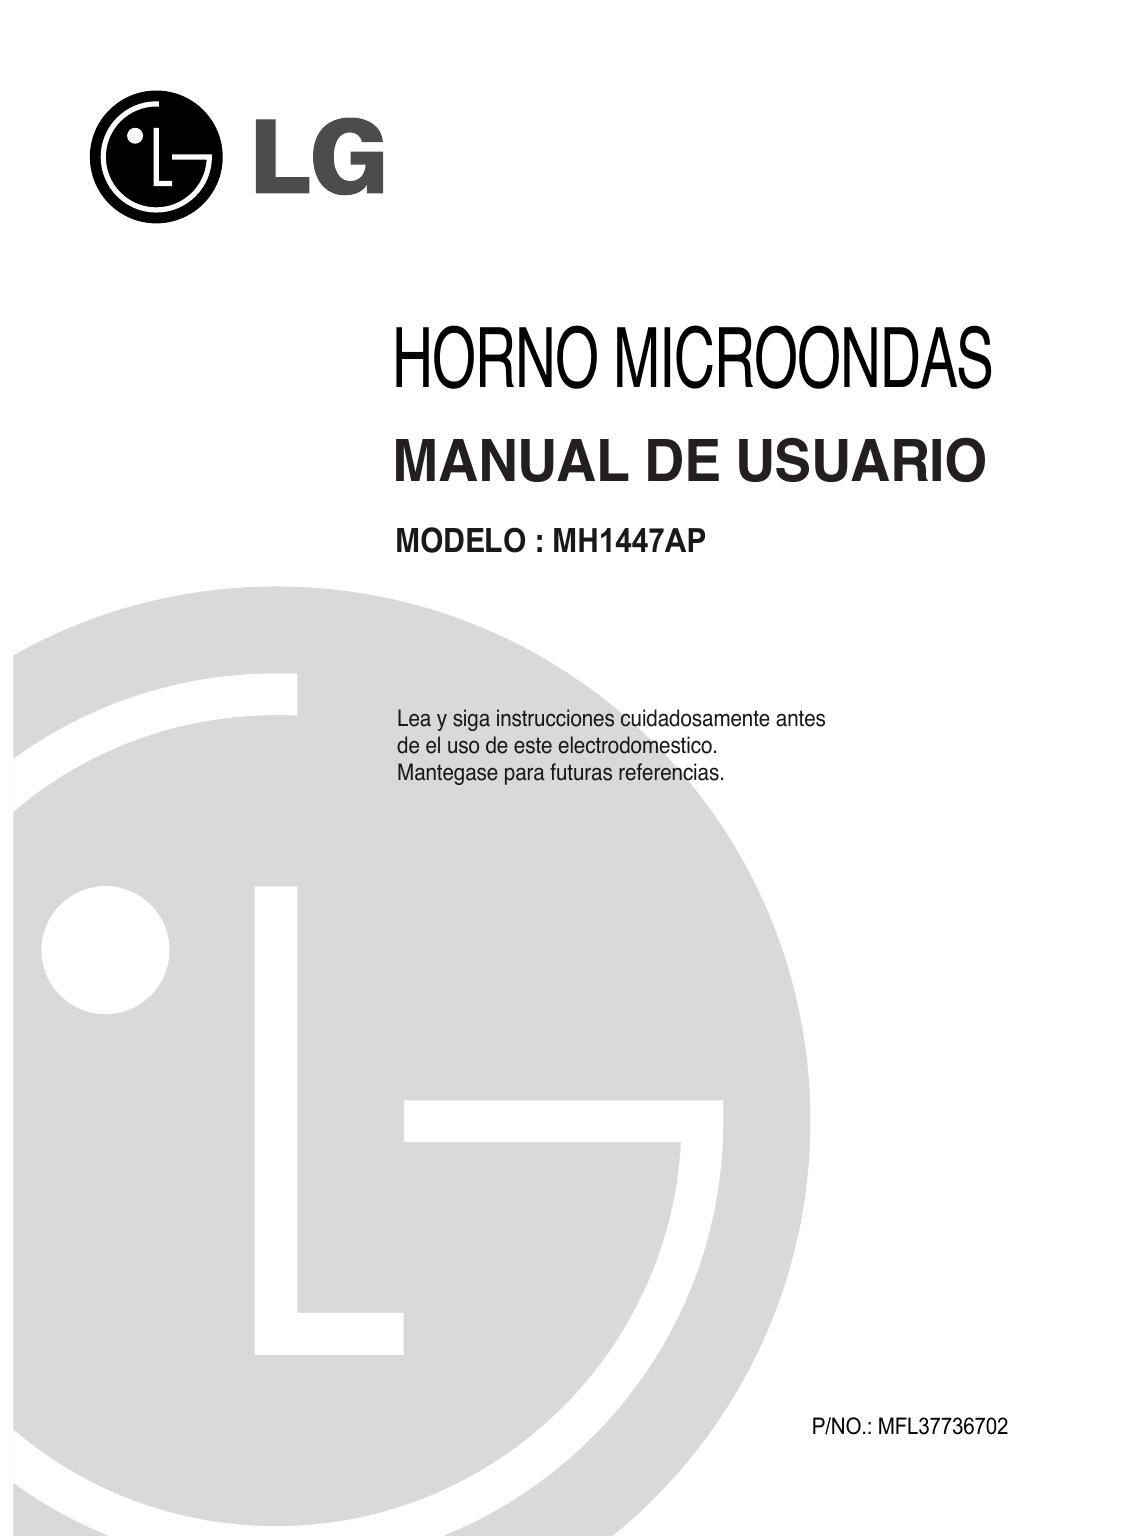 LG MH1447AP Manual de usuario | Manualzz